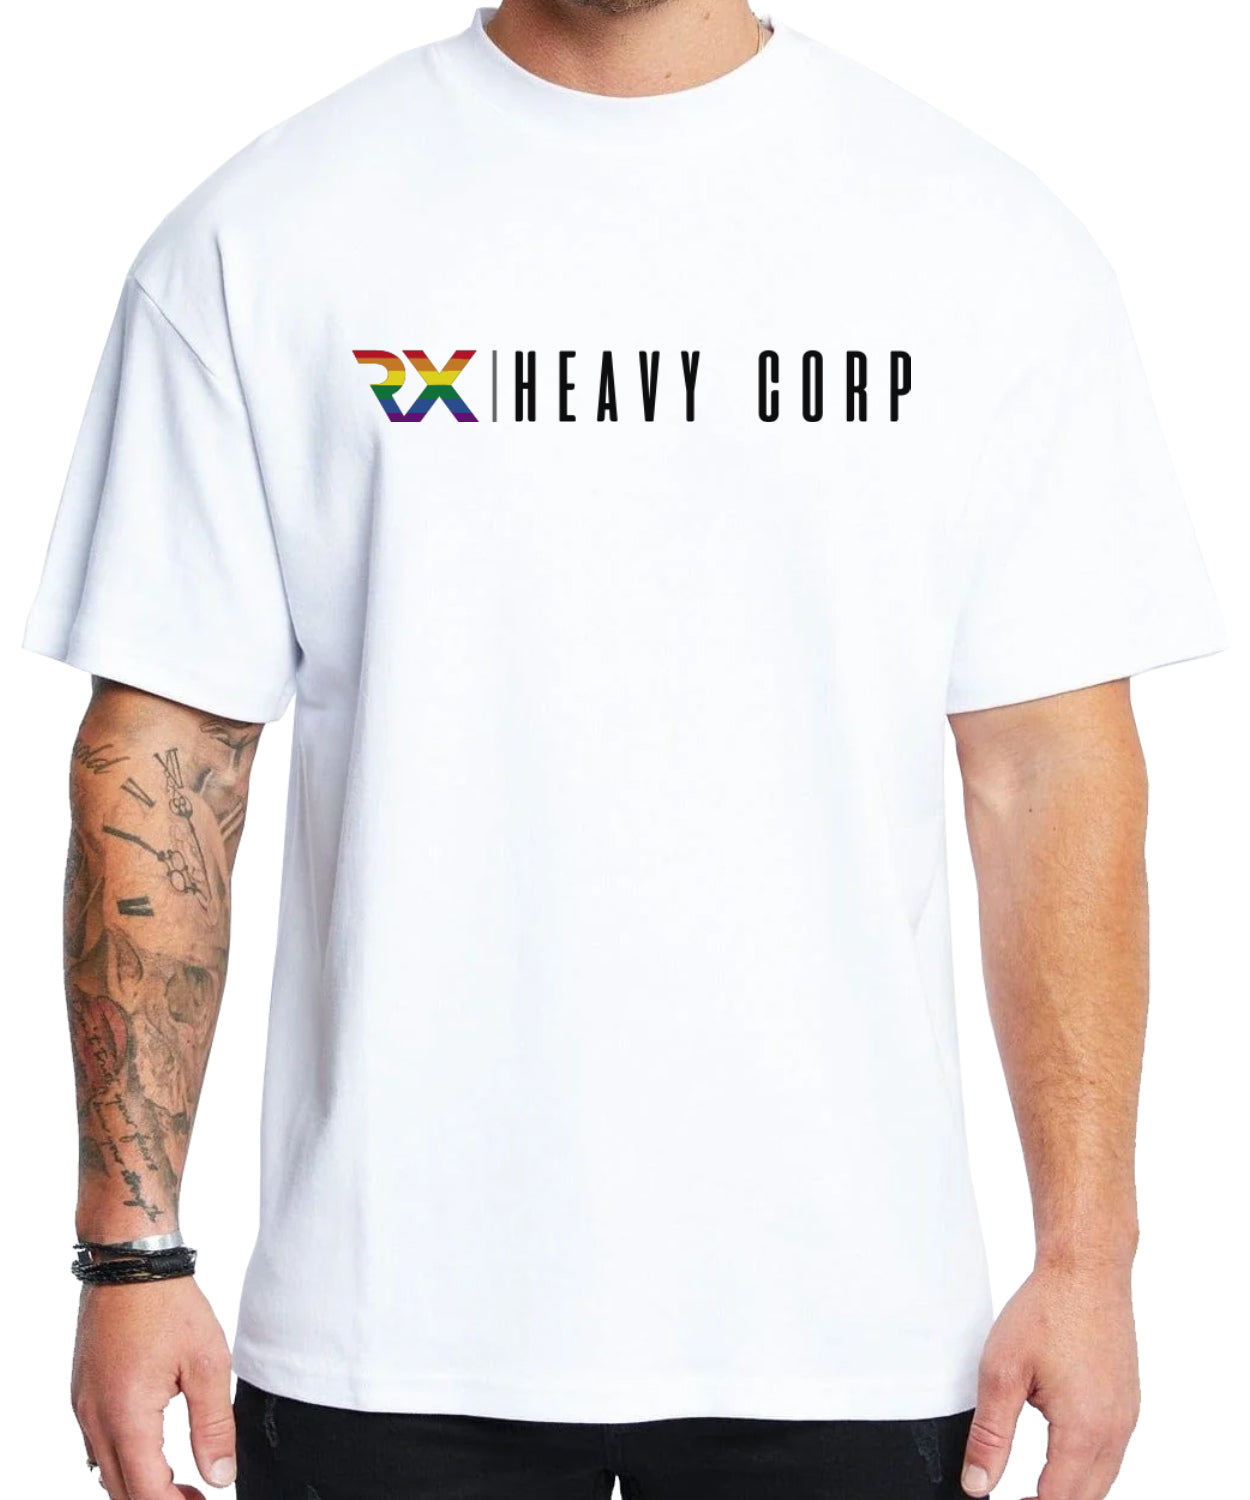 Camiseta Oversize algodón 100% - N8 pride - blanca o negra